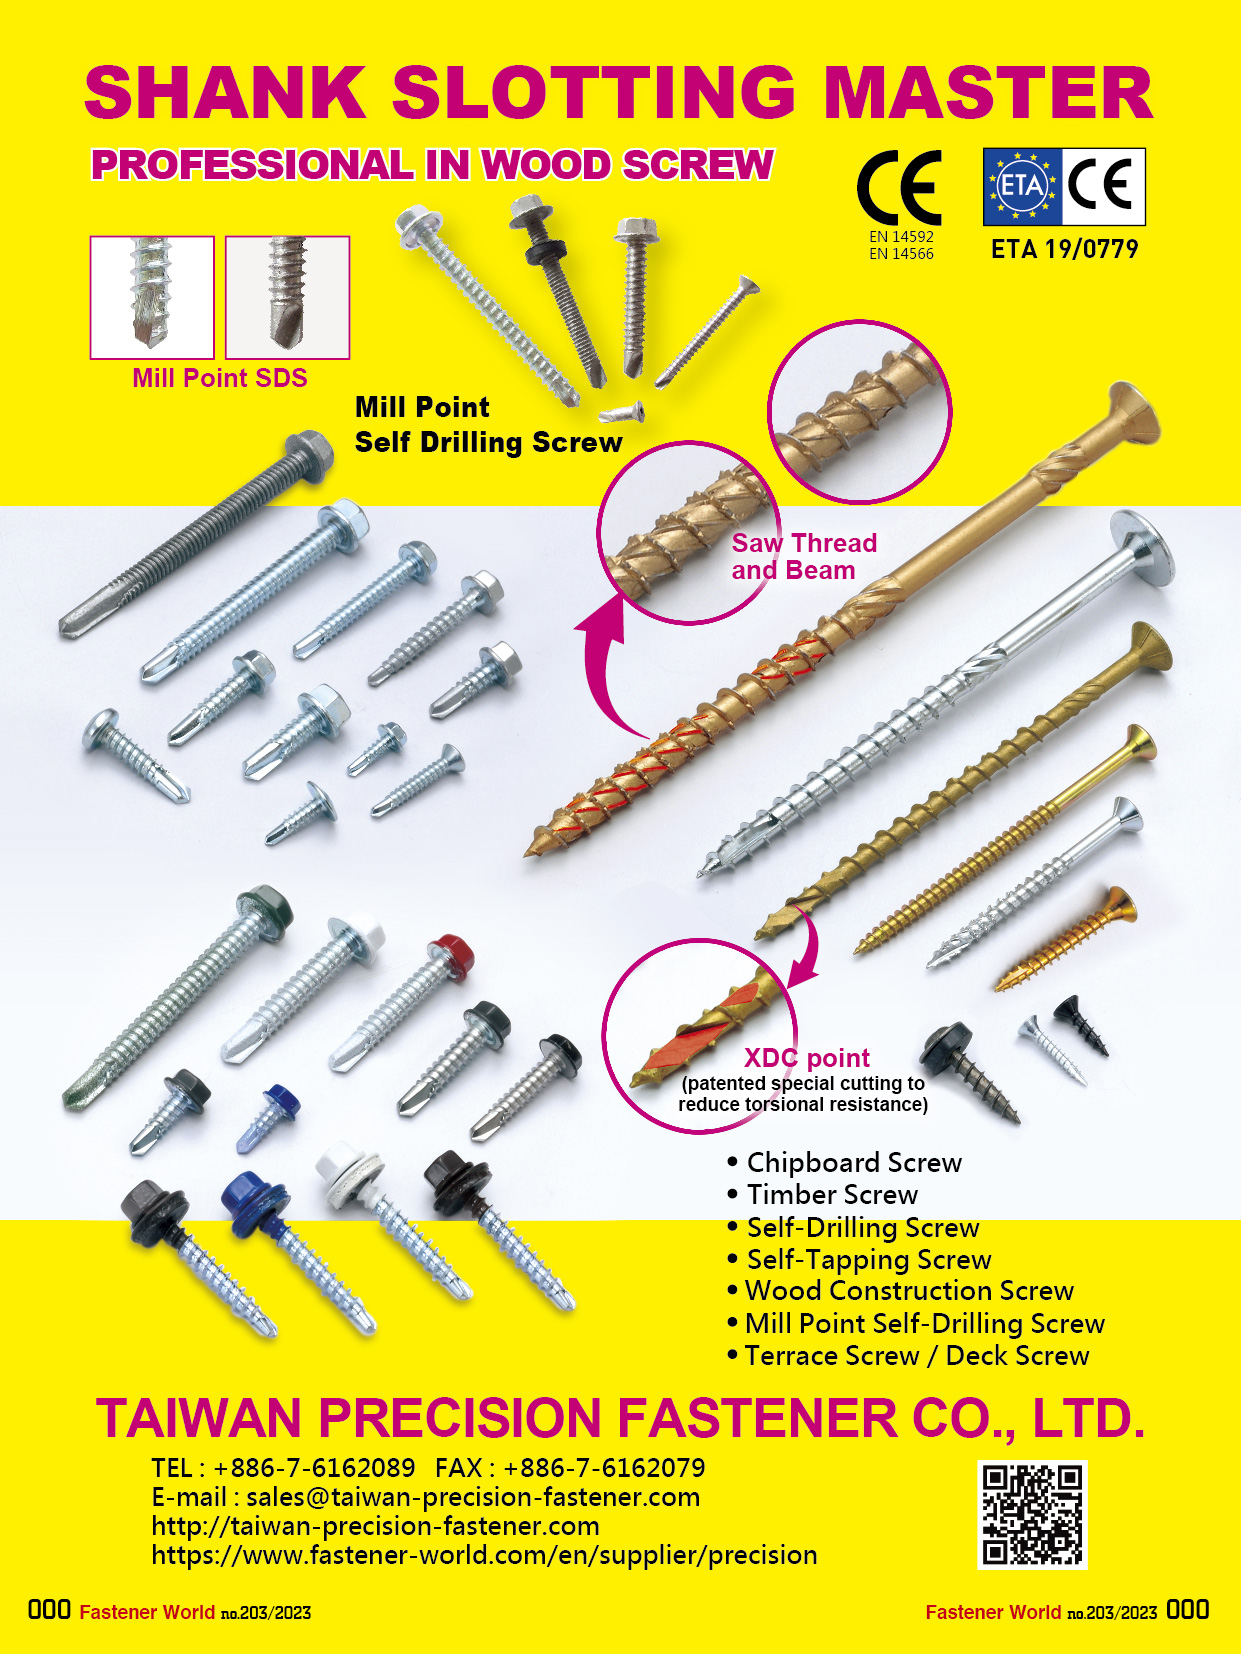 TAIWAN PRECISION FASTENER COMPANY LIMITED , Chipboard Screws, Wood Construction Screws, Mill Point Self-Drilling Screws, Terrace Screws, Deck Screws, Timber Screws, Self-Tapping Screws